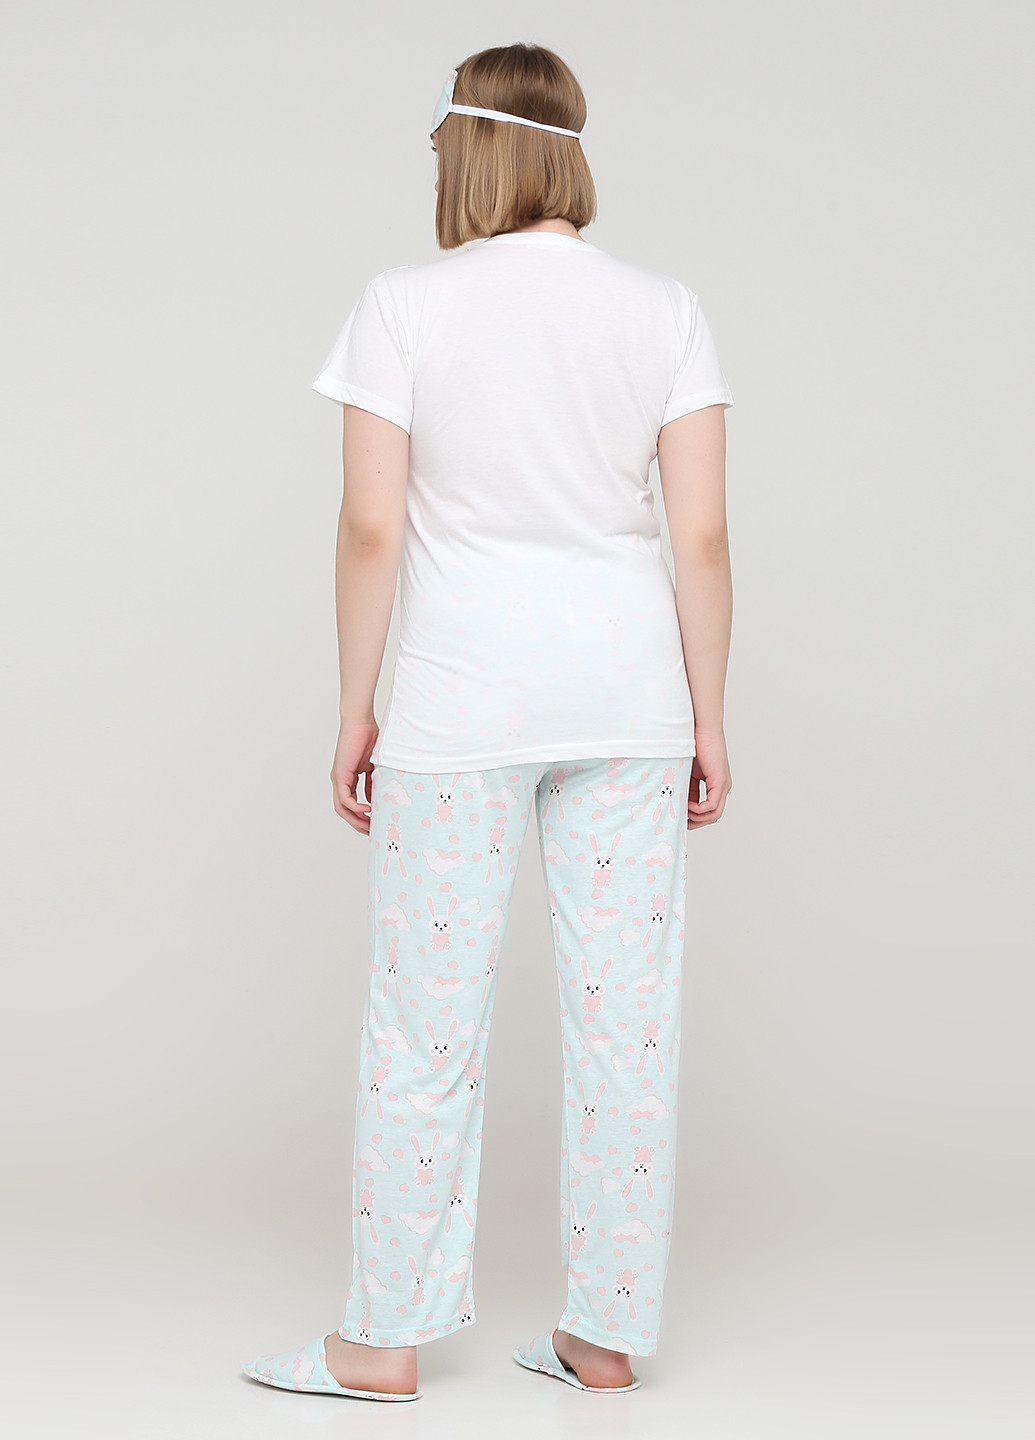 Светло-голубая всесезон пижама (футболка, брюки, маска для сна, тапочки) футболка + брюки Mirano